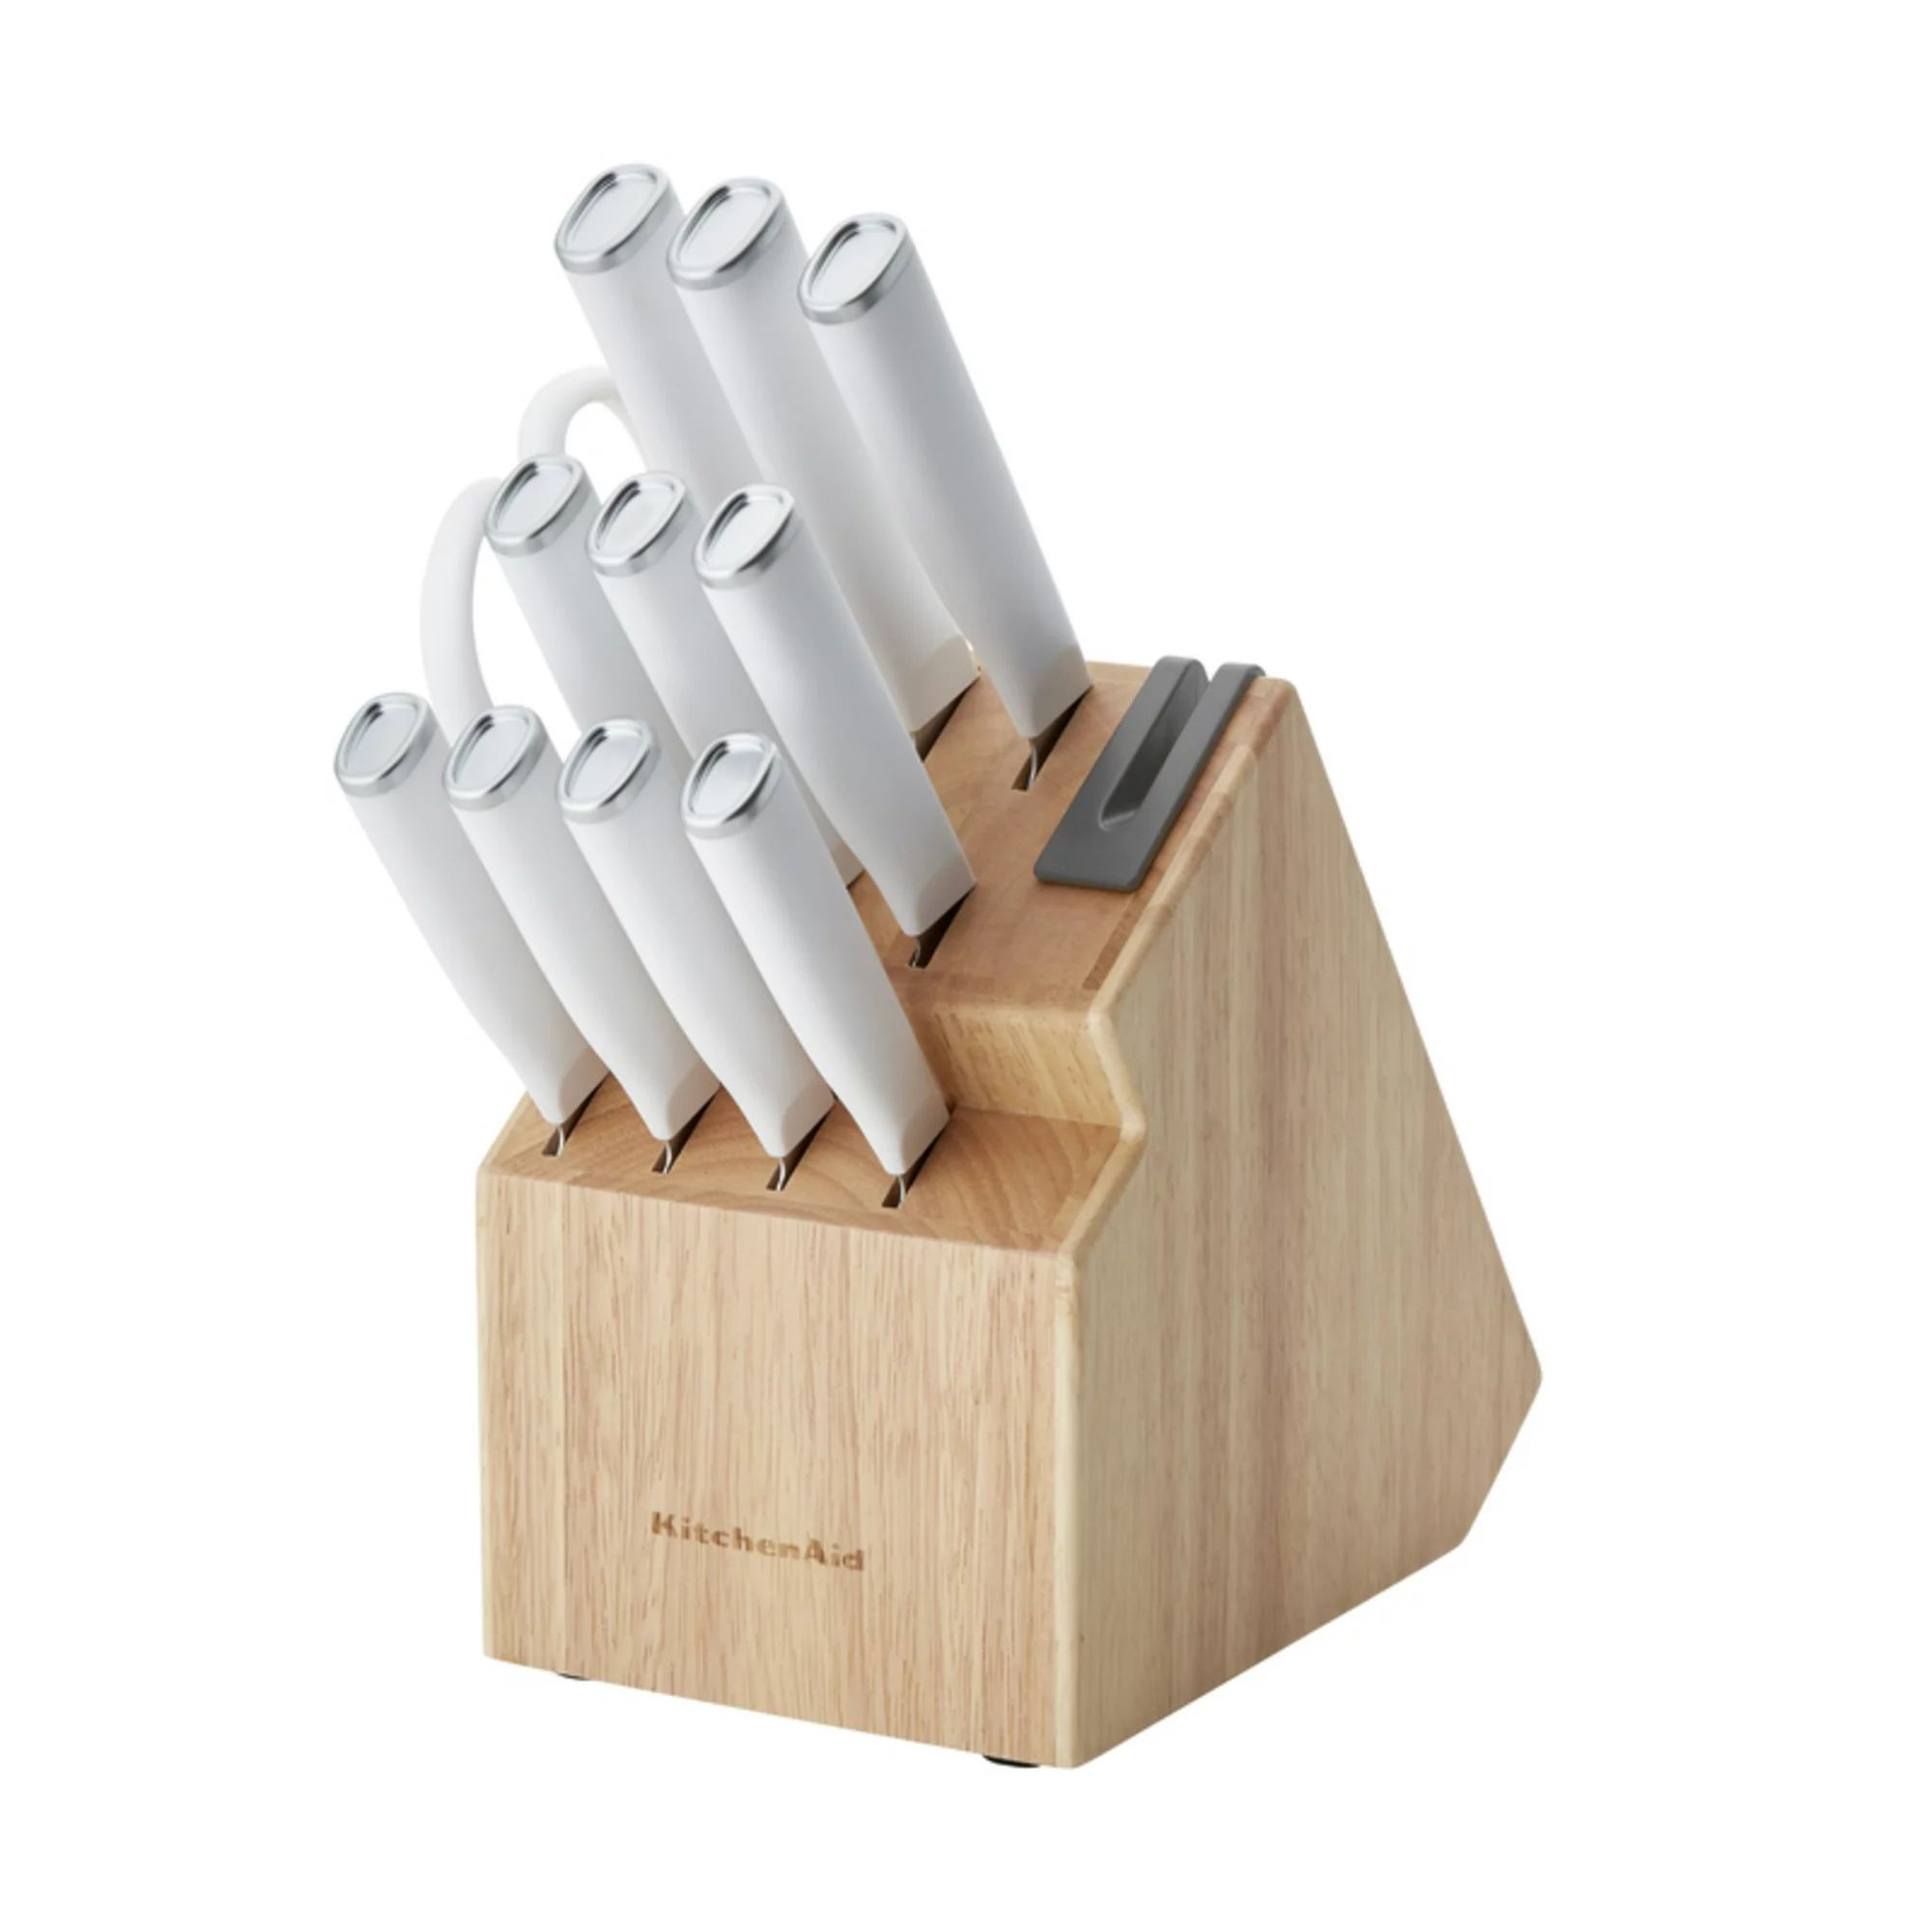 KitchenAid Classic Japanese Steel 12-Piece Knife Block Set with Built-in Knife Sharpener, White | Walmart (US)